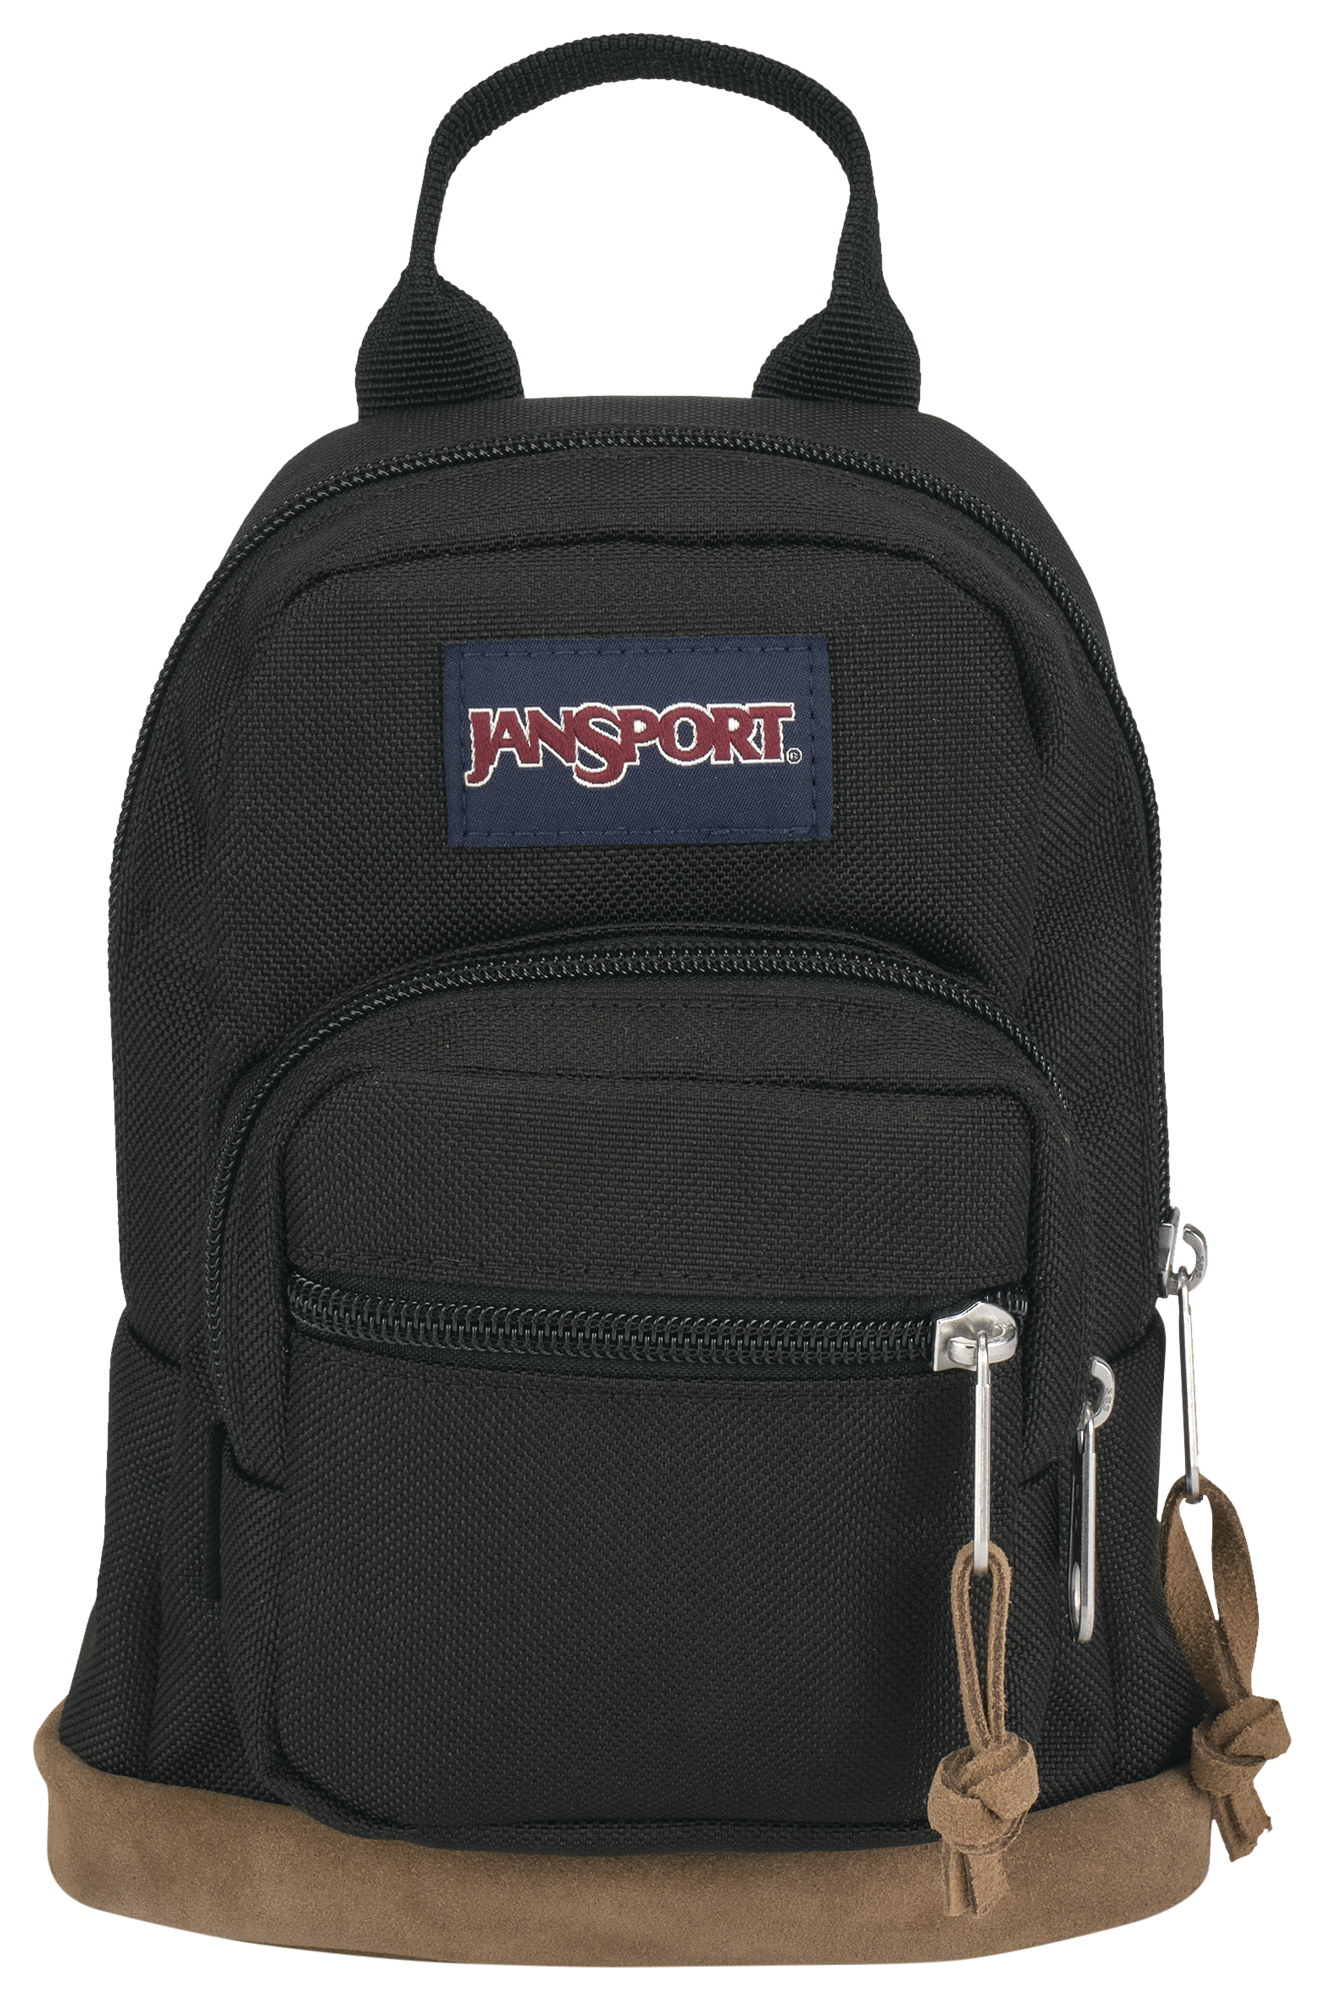 JanSport Mini Right Backpack